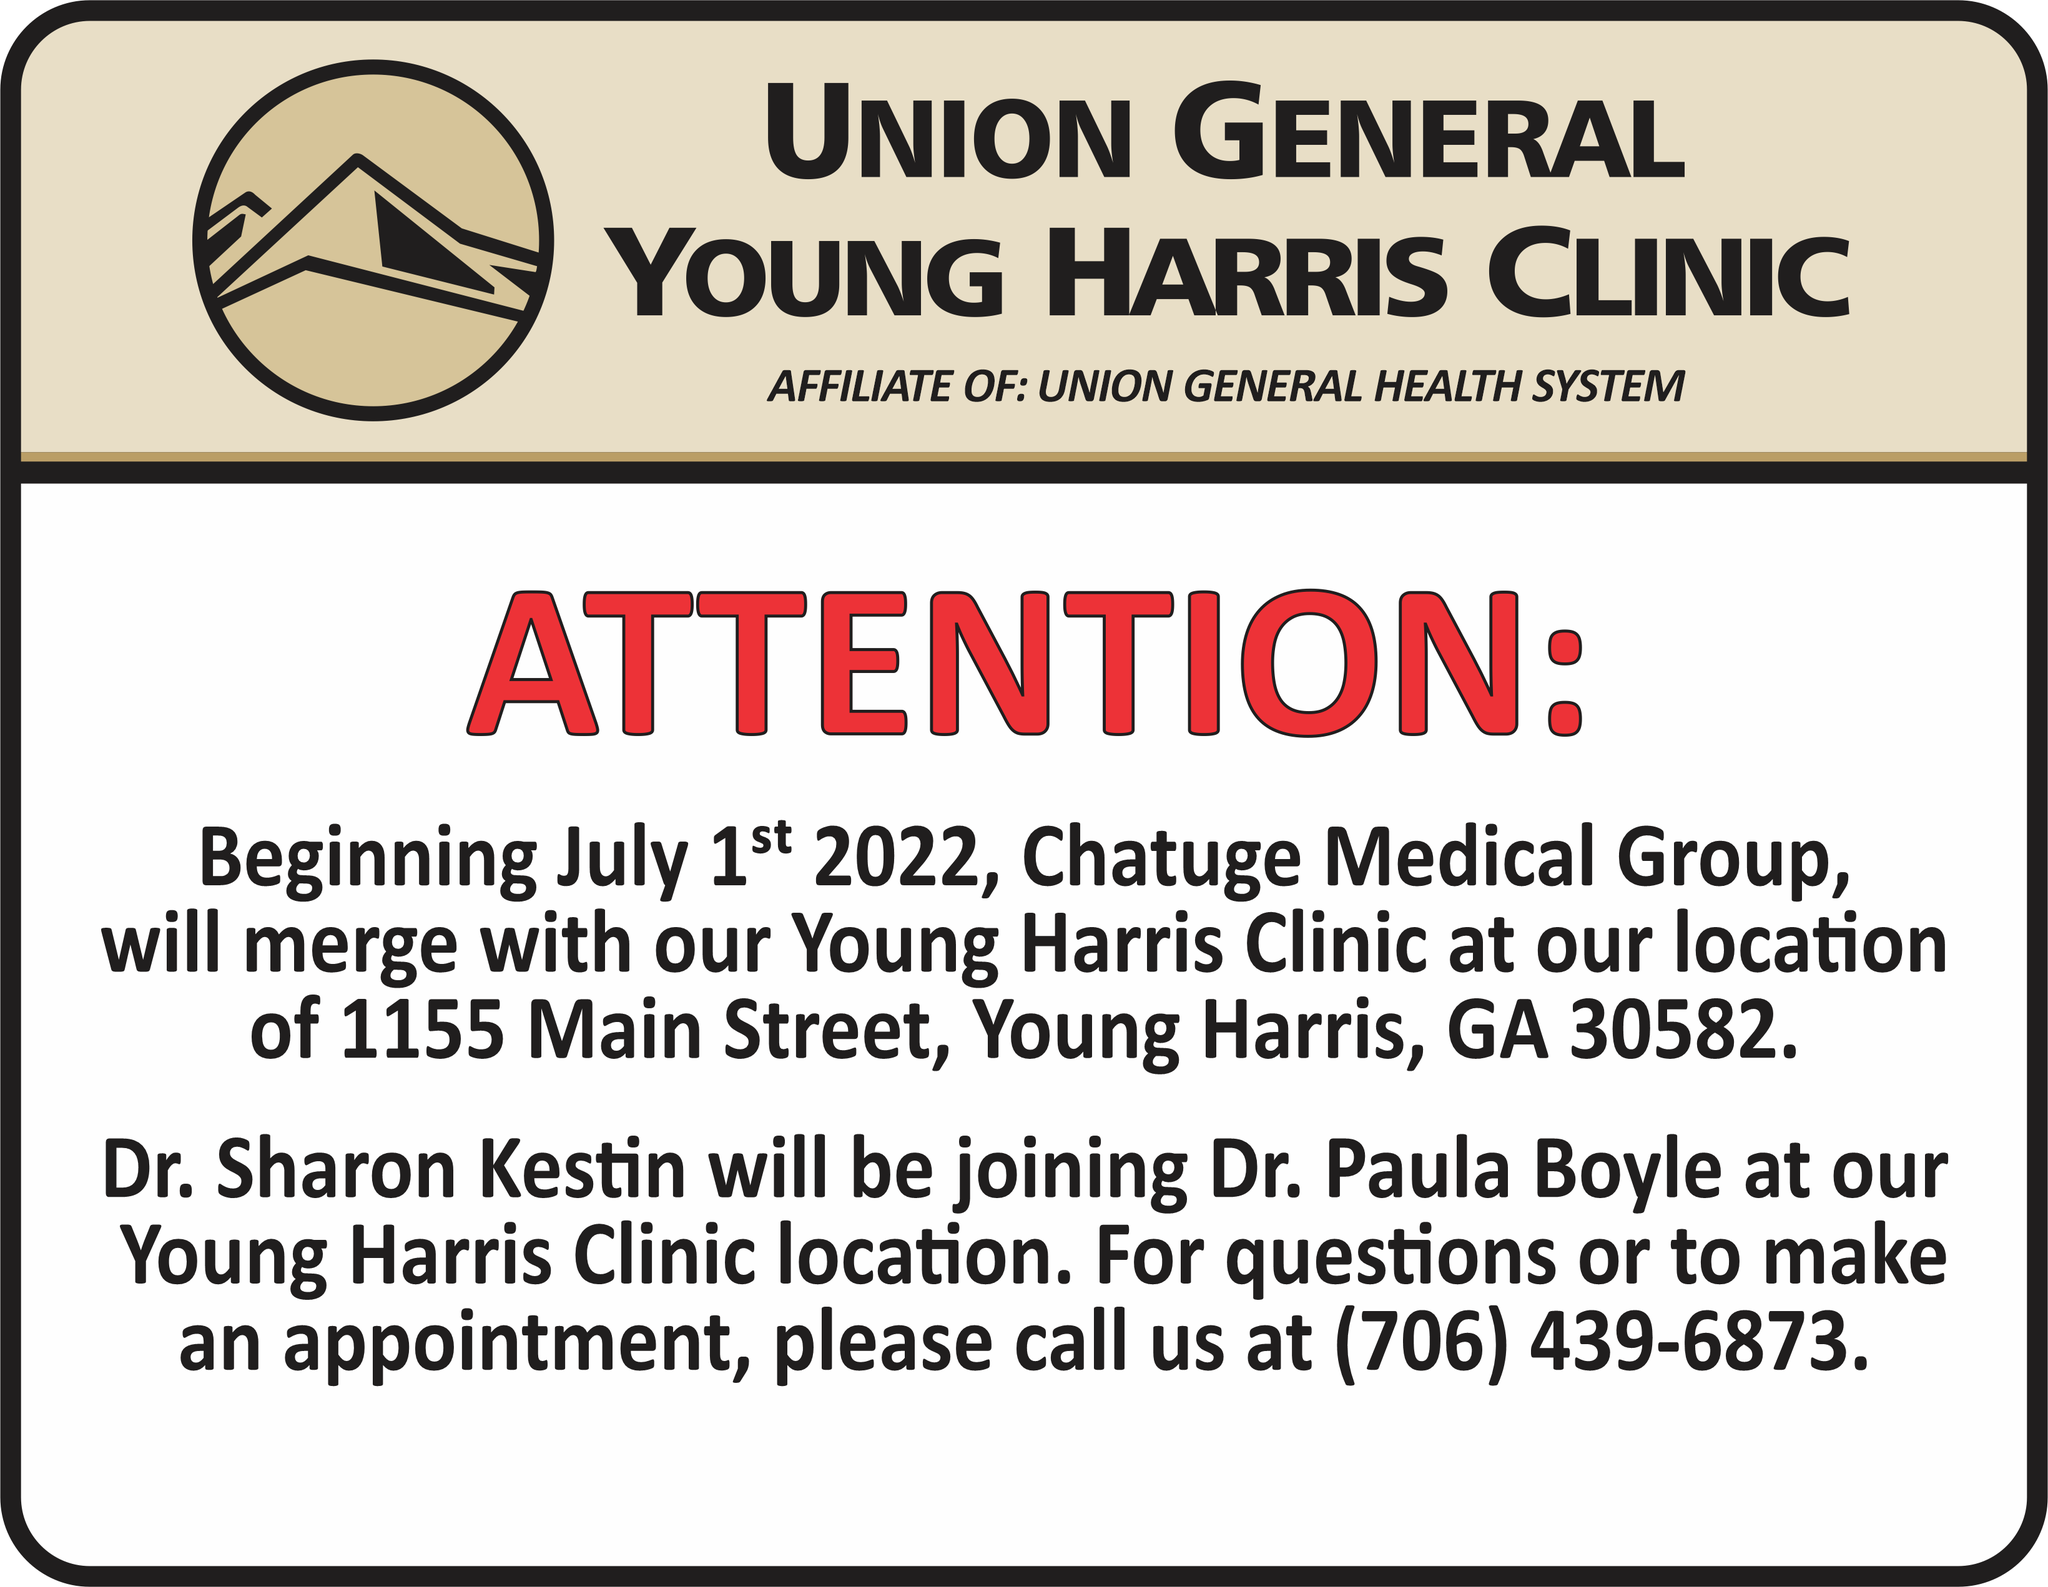 Union General Young Harris Clinic 1155 Main St, Young Harris Georgia 30582